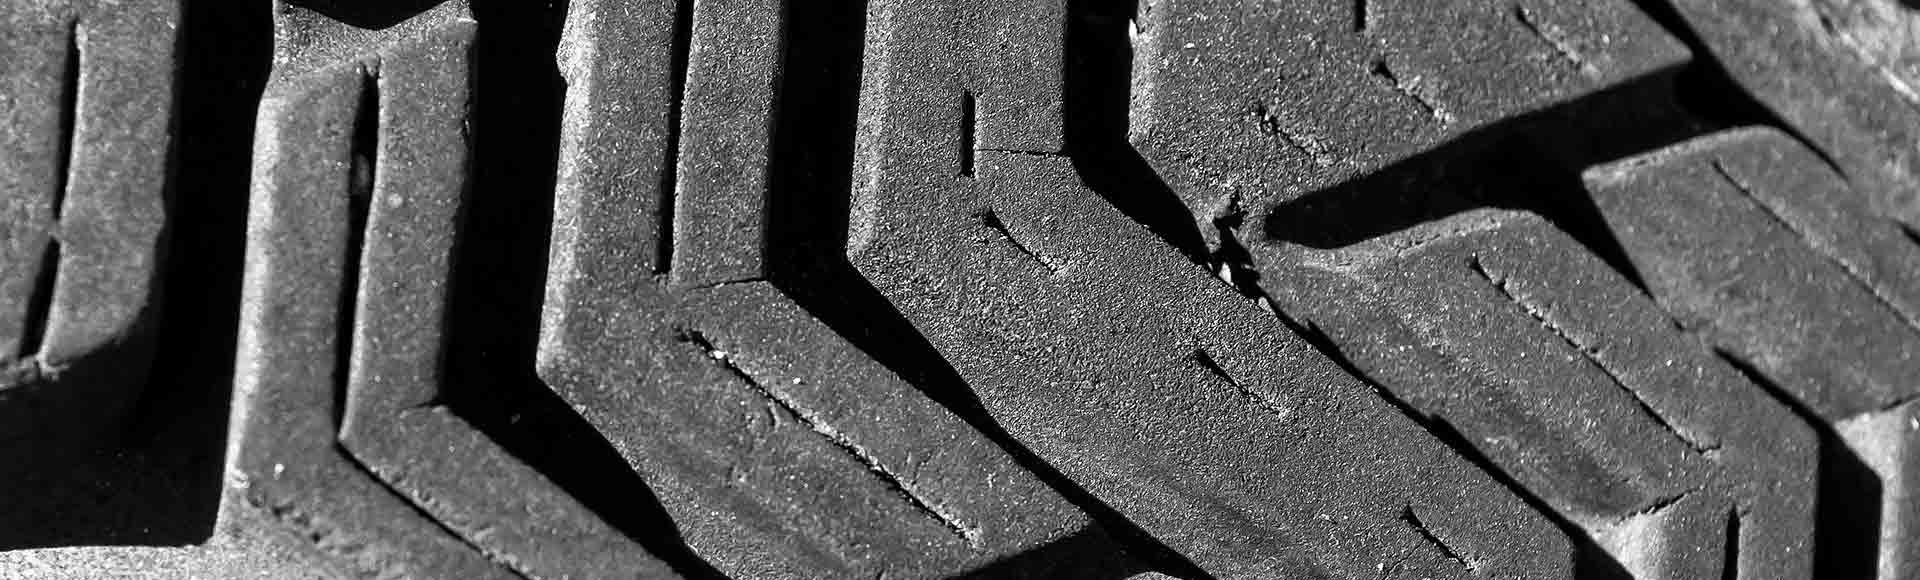 Rubber Tire Mulch - Hazard or Harmless?